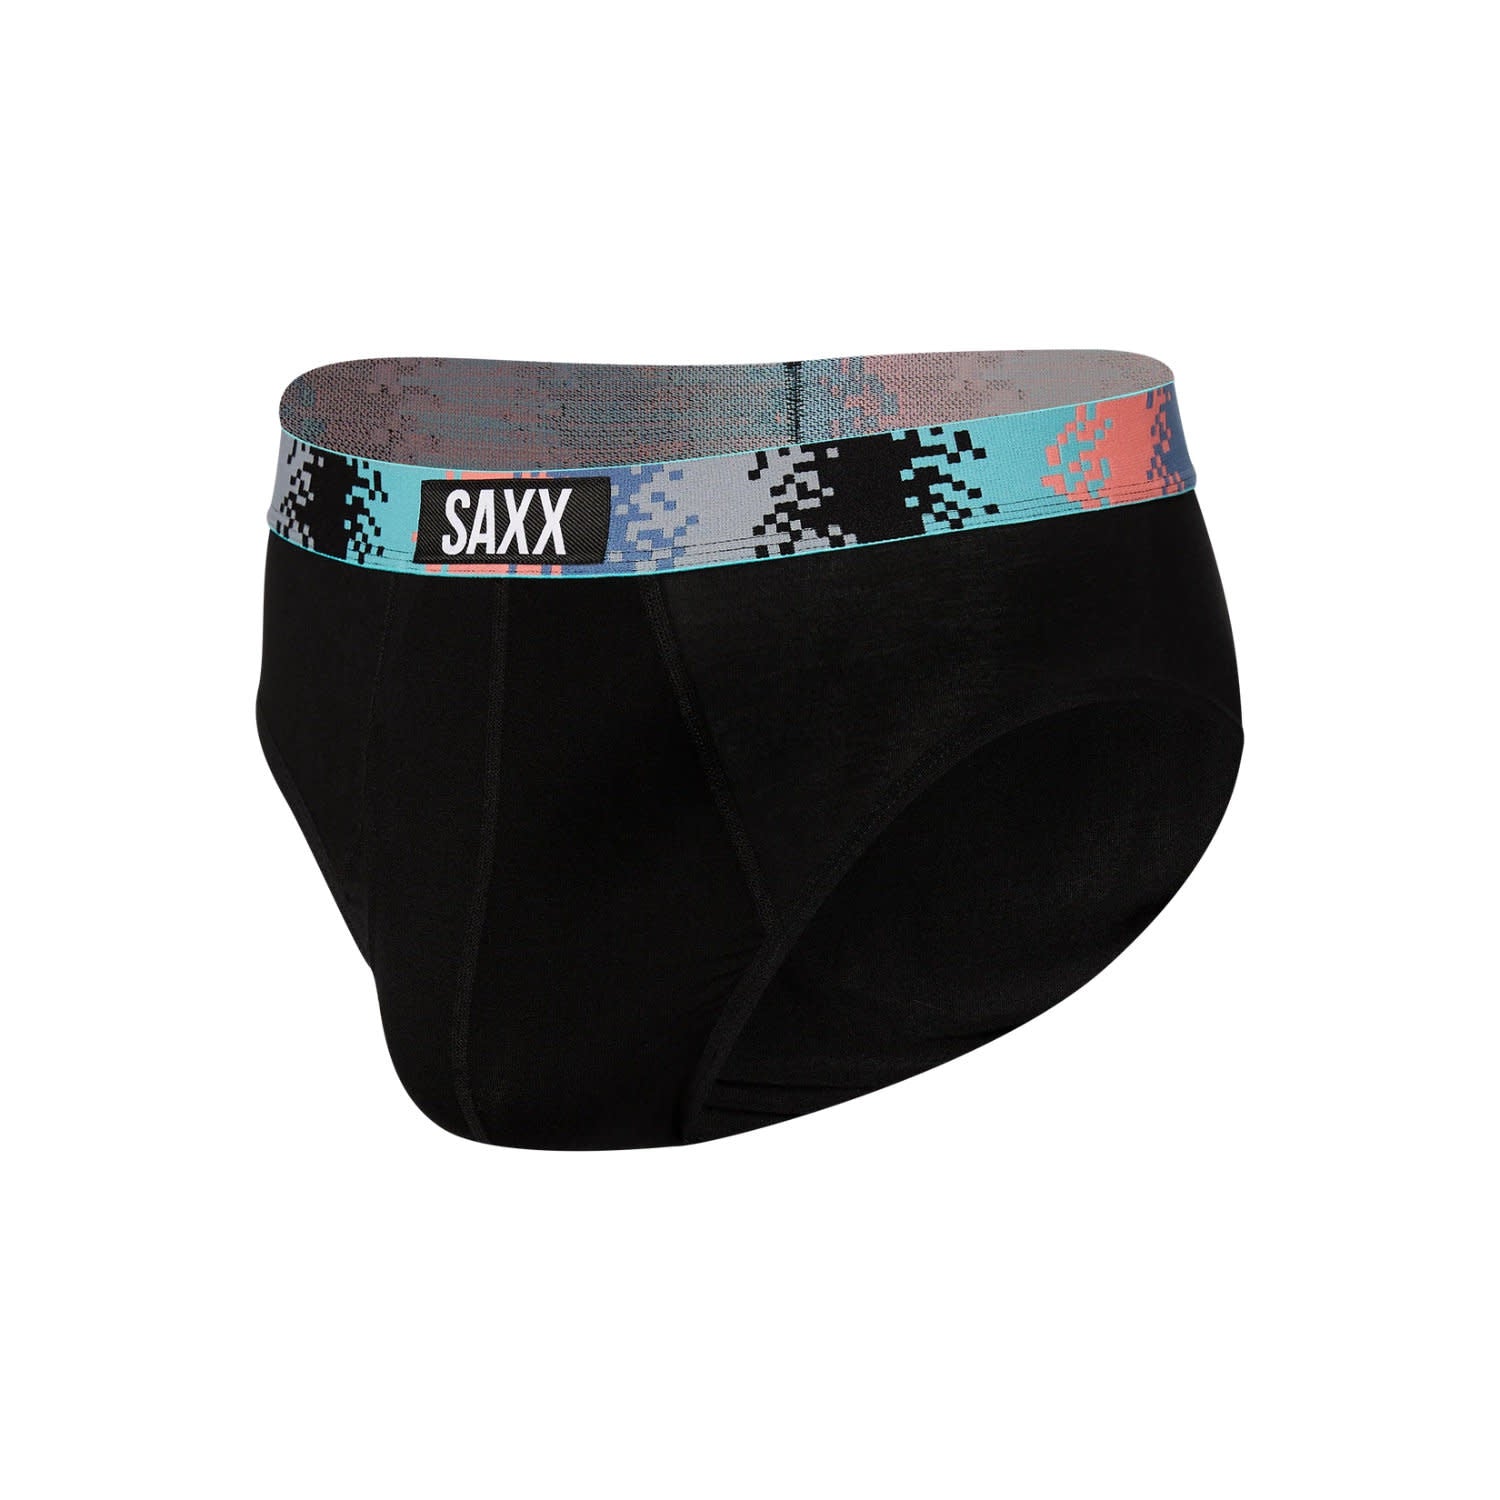 SAXX Ultra Super Soft Brief - Tech Rec Wb - Black - 1 - Underwear - Briefs